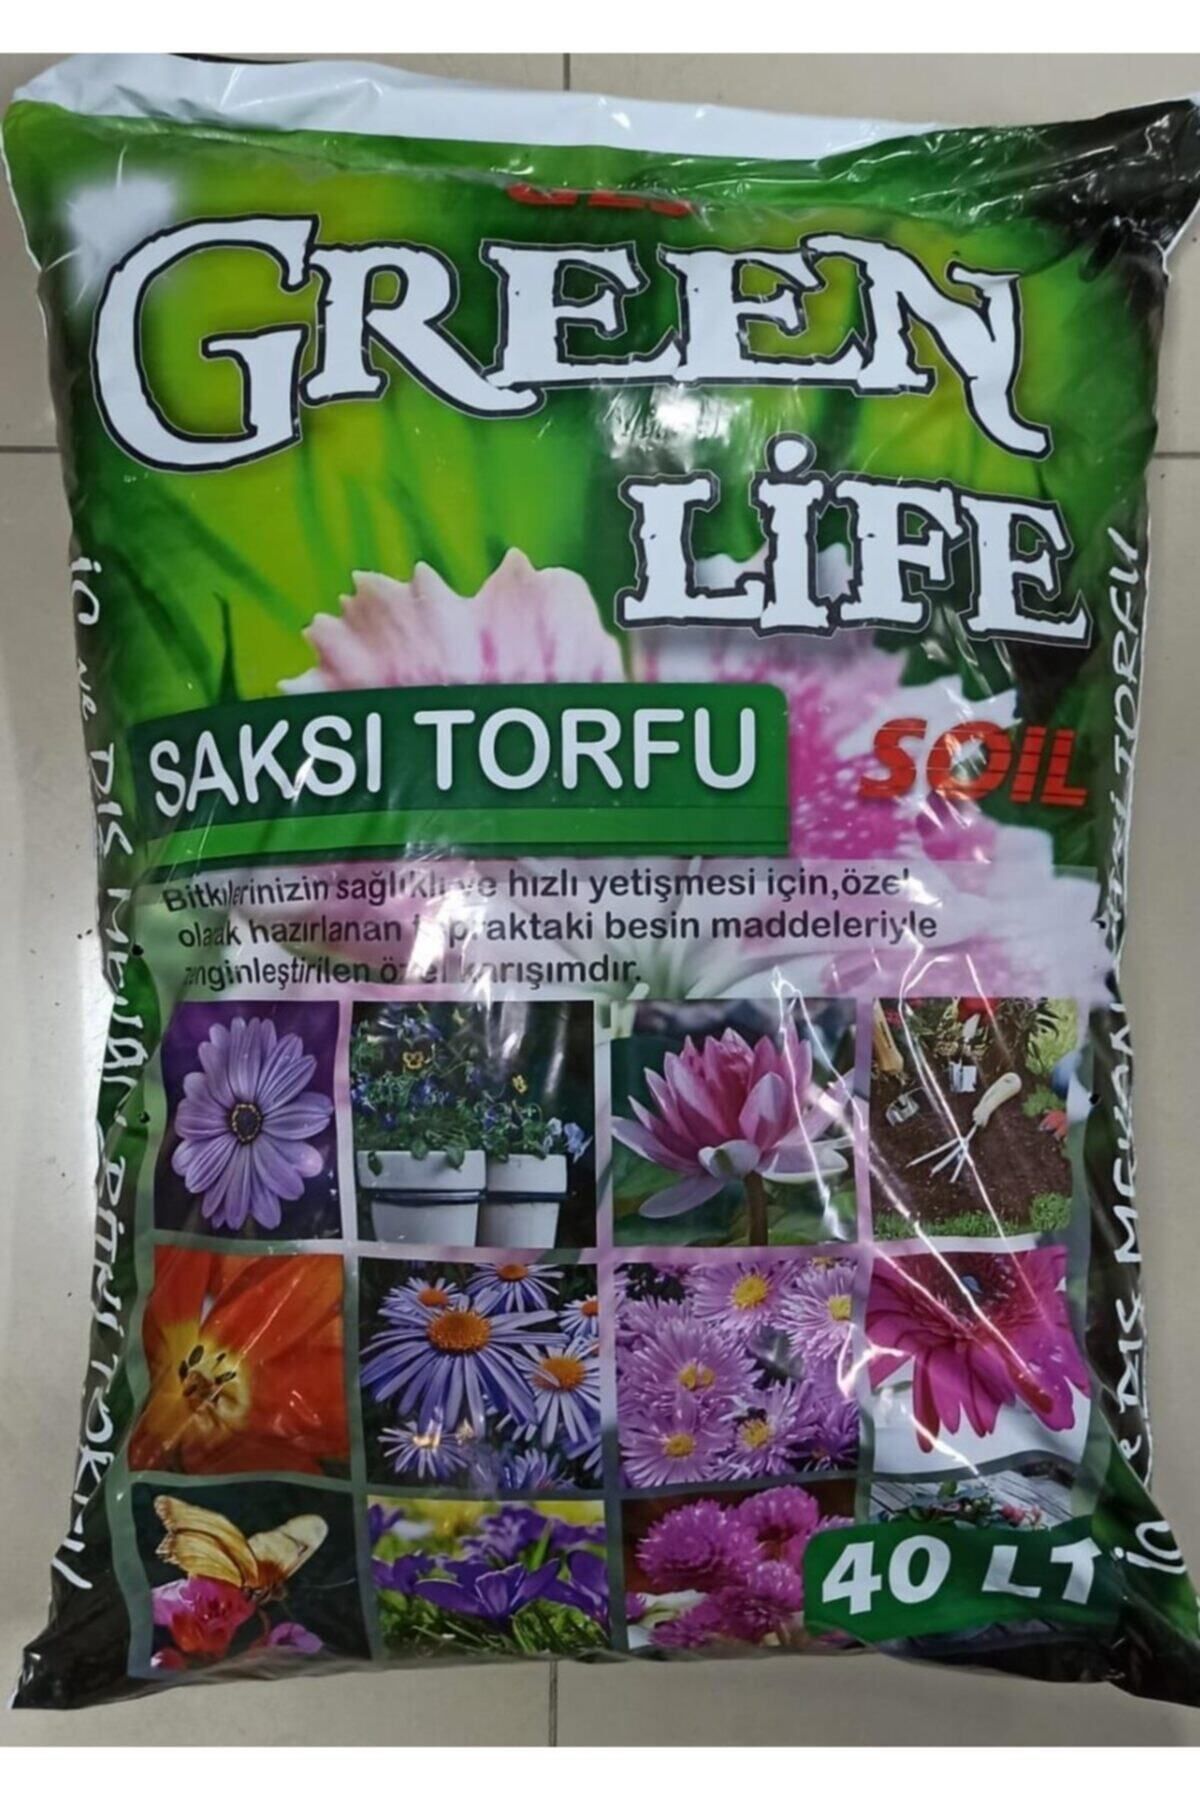 Green Life Harika Bitki Toprağı, Fideleme, Çicek Toprağı, Htm Torf Humus Katkılı 40 Lt.